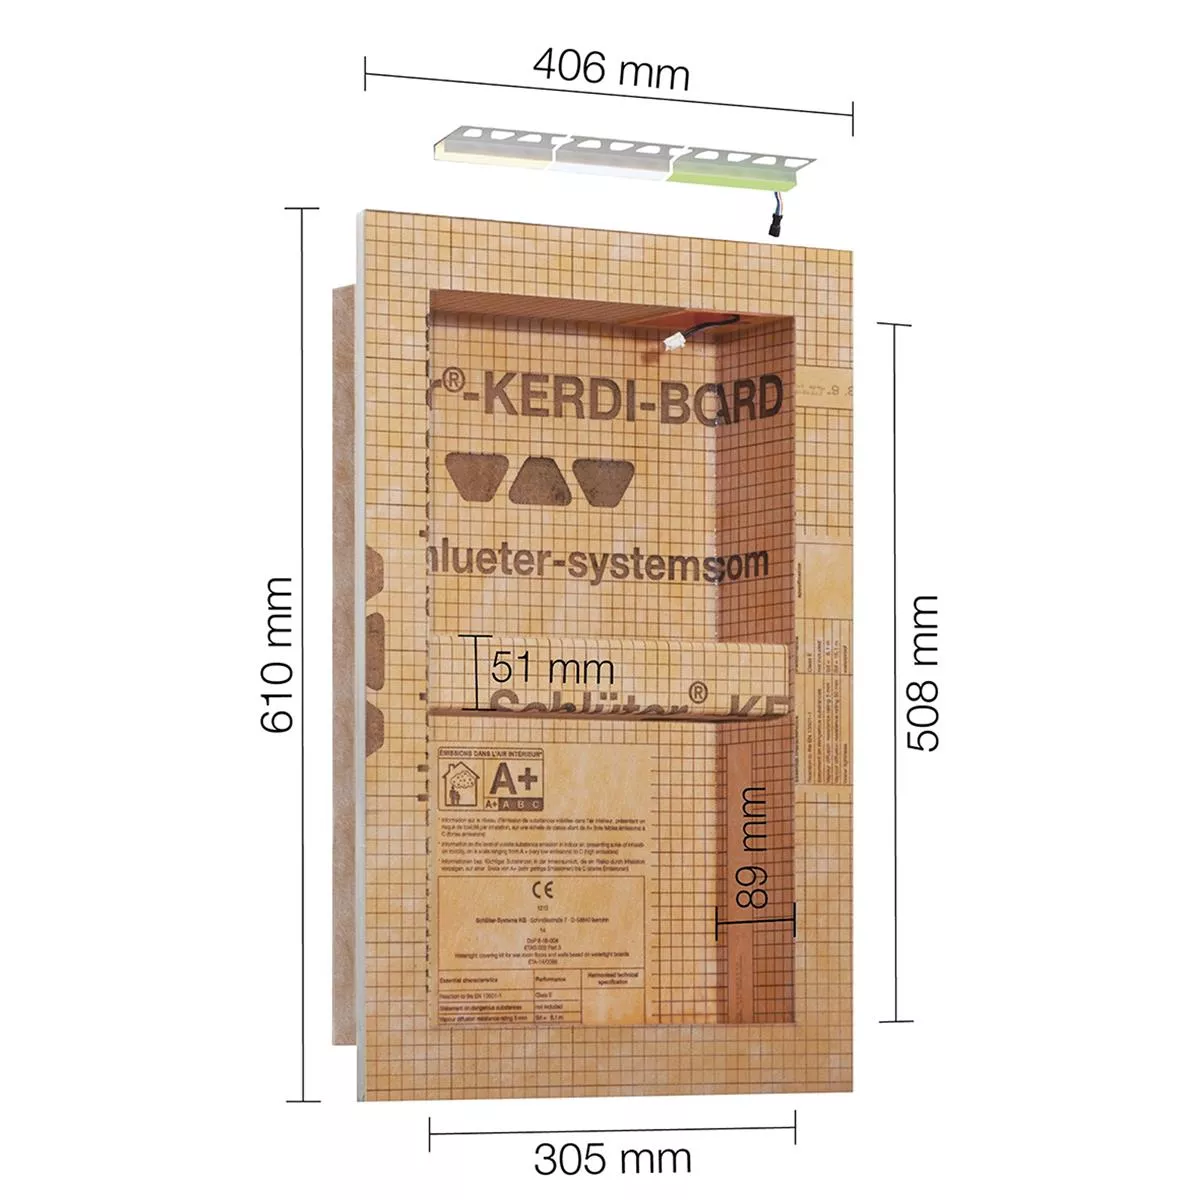 Schlüter Kerdi Board NLT nisset LED-verlichting neutraal wit 30,5x50,8x0,89 cm